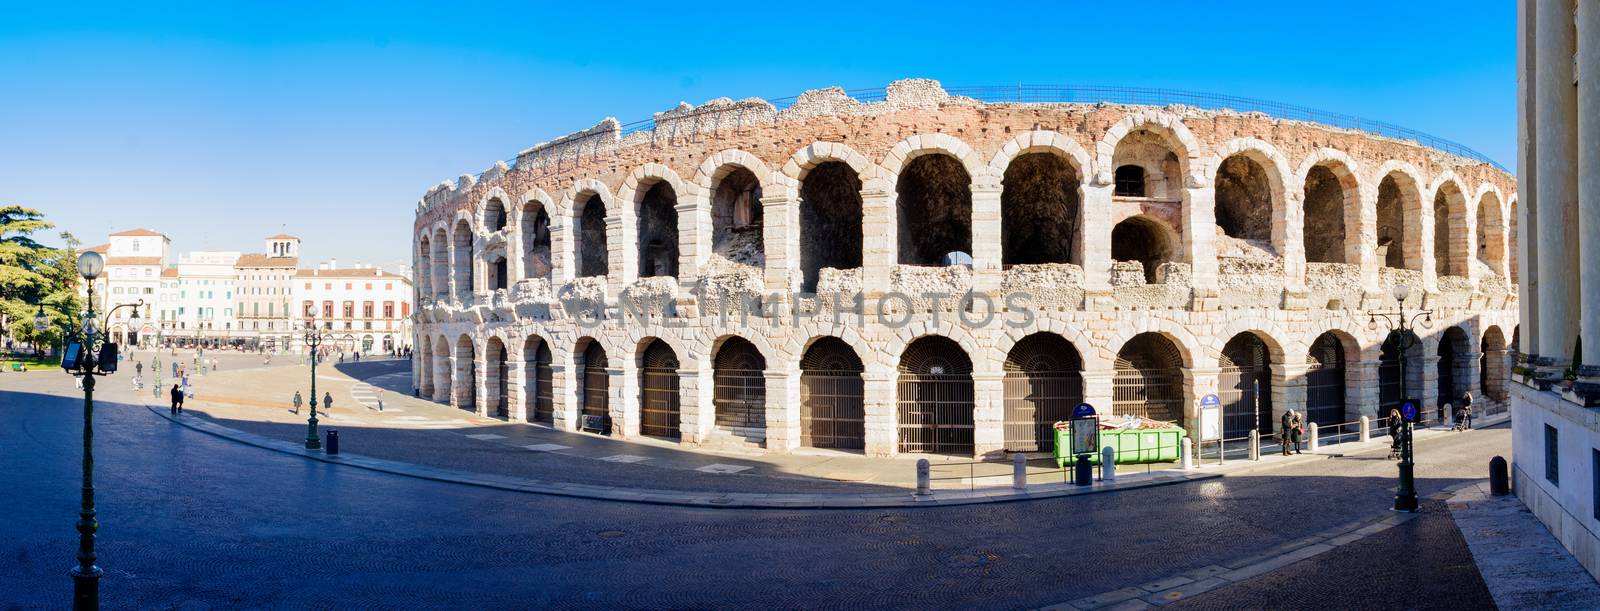 VERONA, ITALY - FEB 01, 2015: Scene of Piazza Bra and the Arena, with local and tourists, in Verona, Veneto, Italy